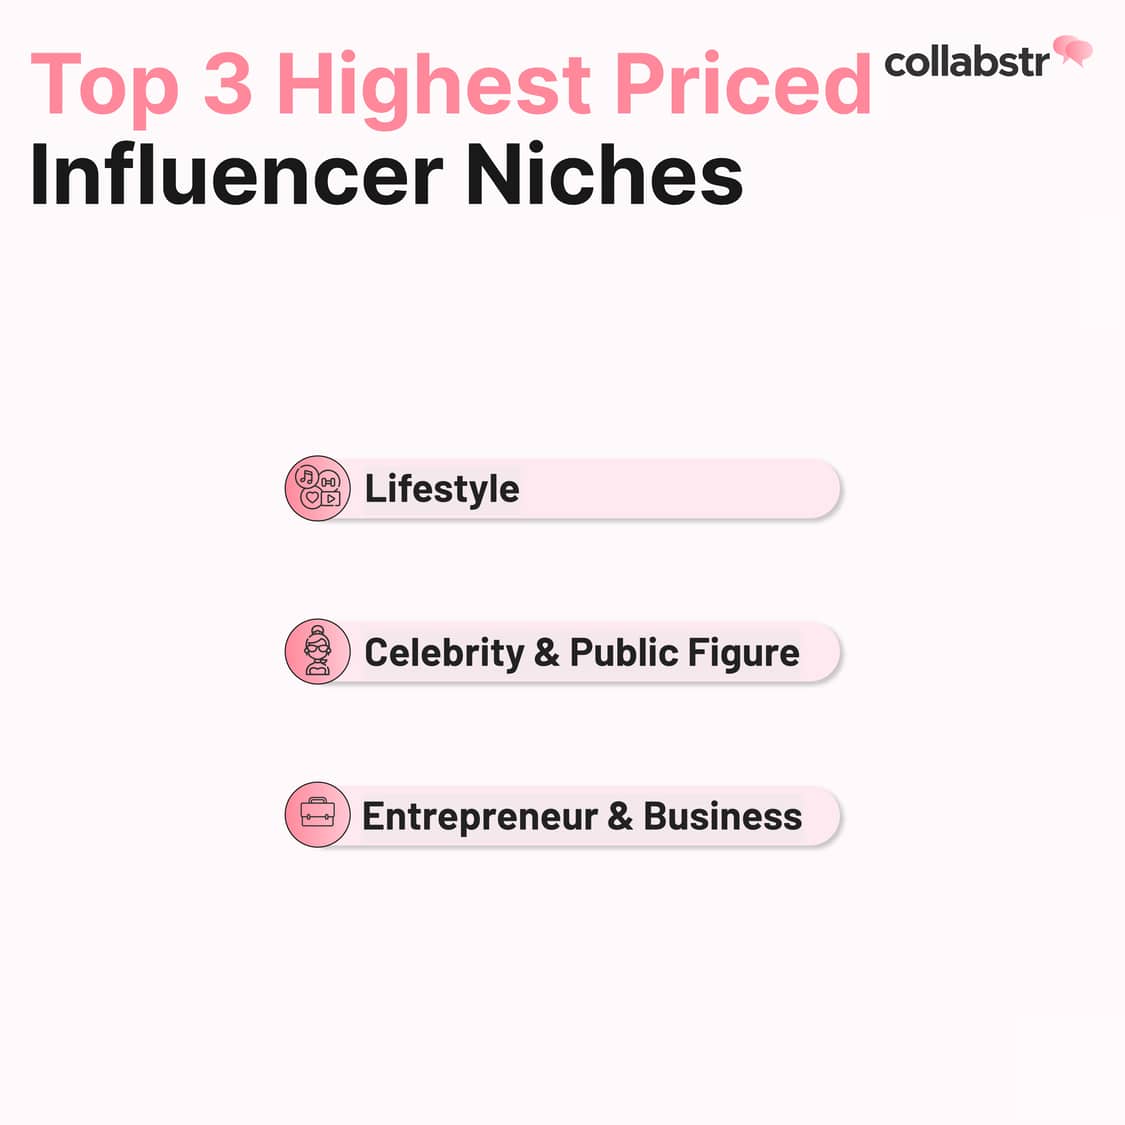 Top 3 highest priced influencer niches.